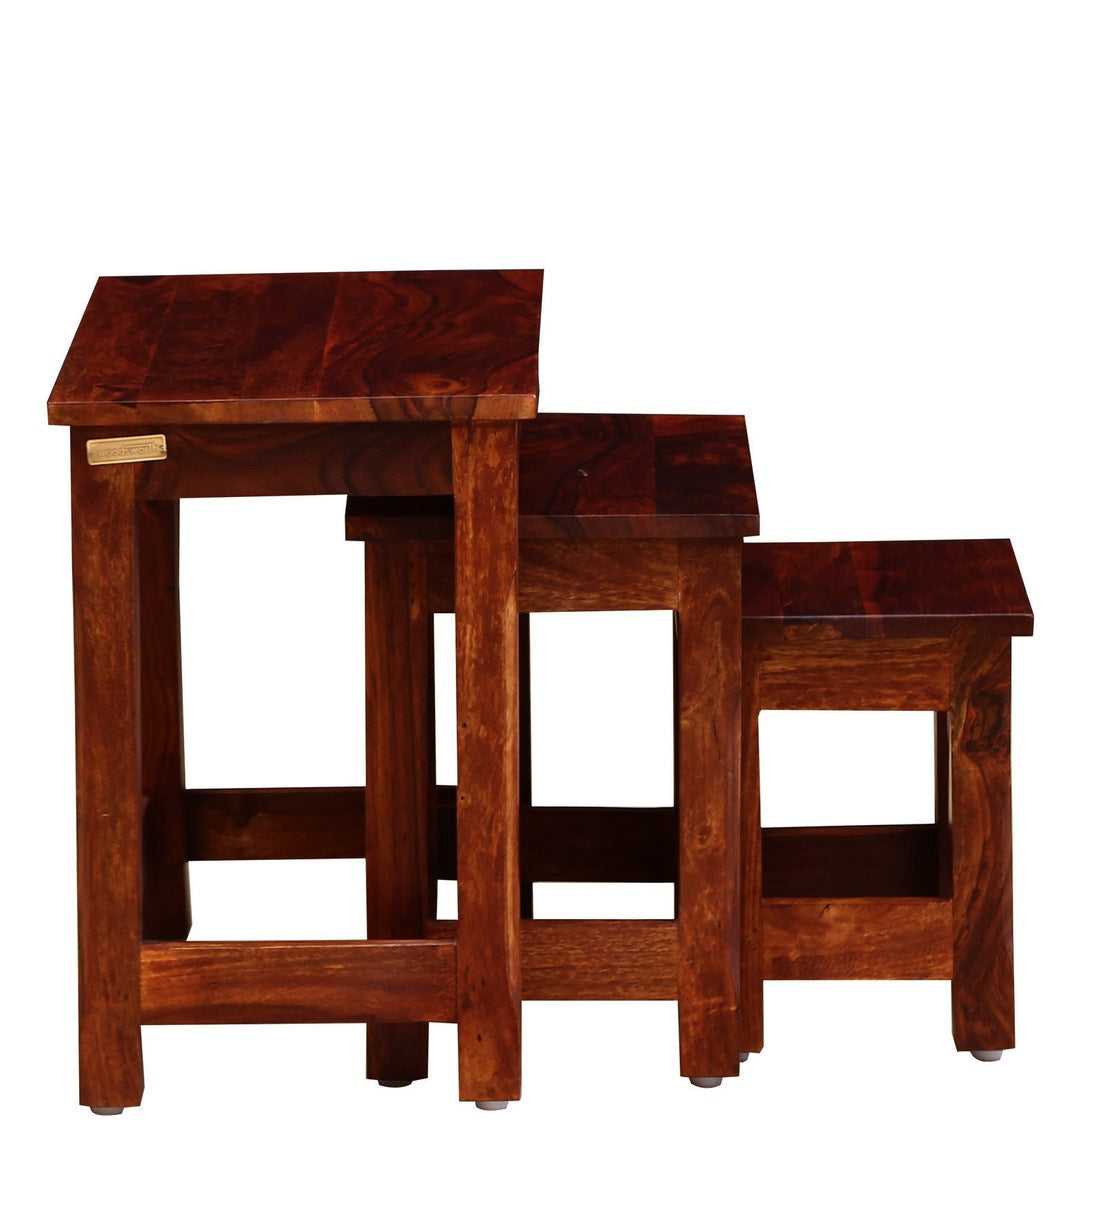 Acro Sheesham Wood Nest of Tables for Living Room - Rajwada Furnish